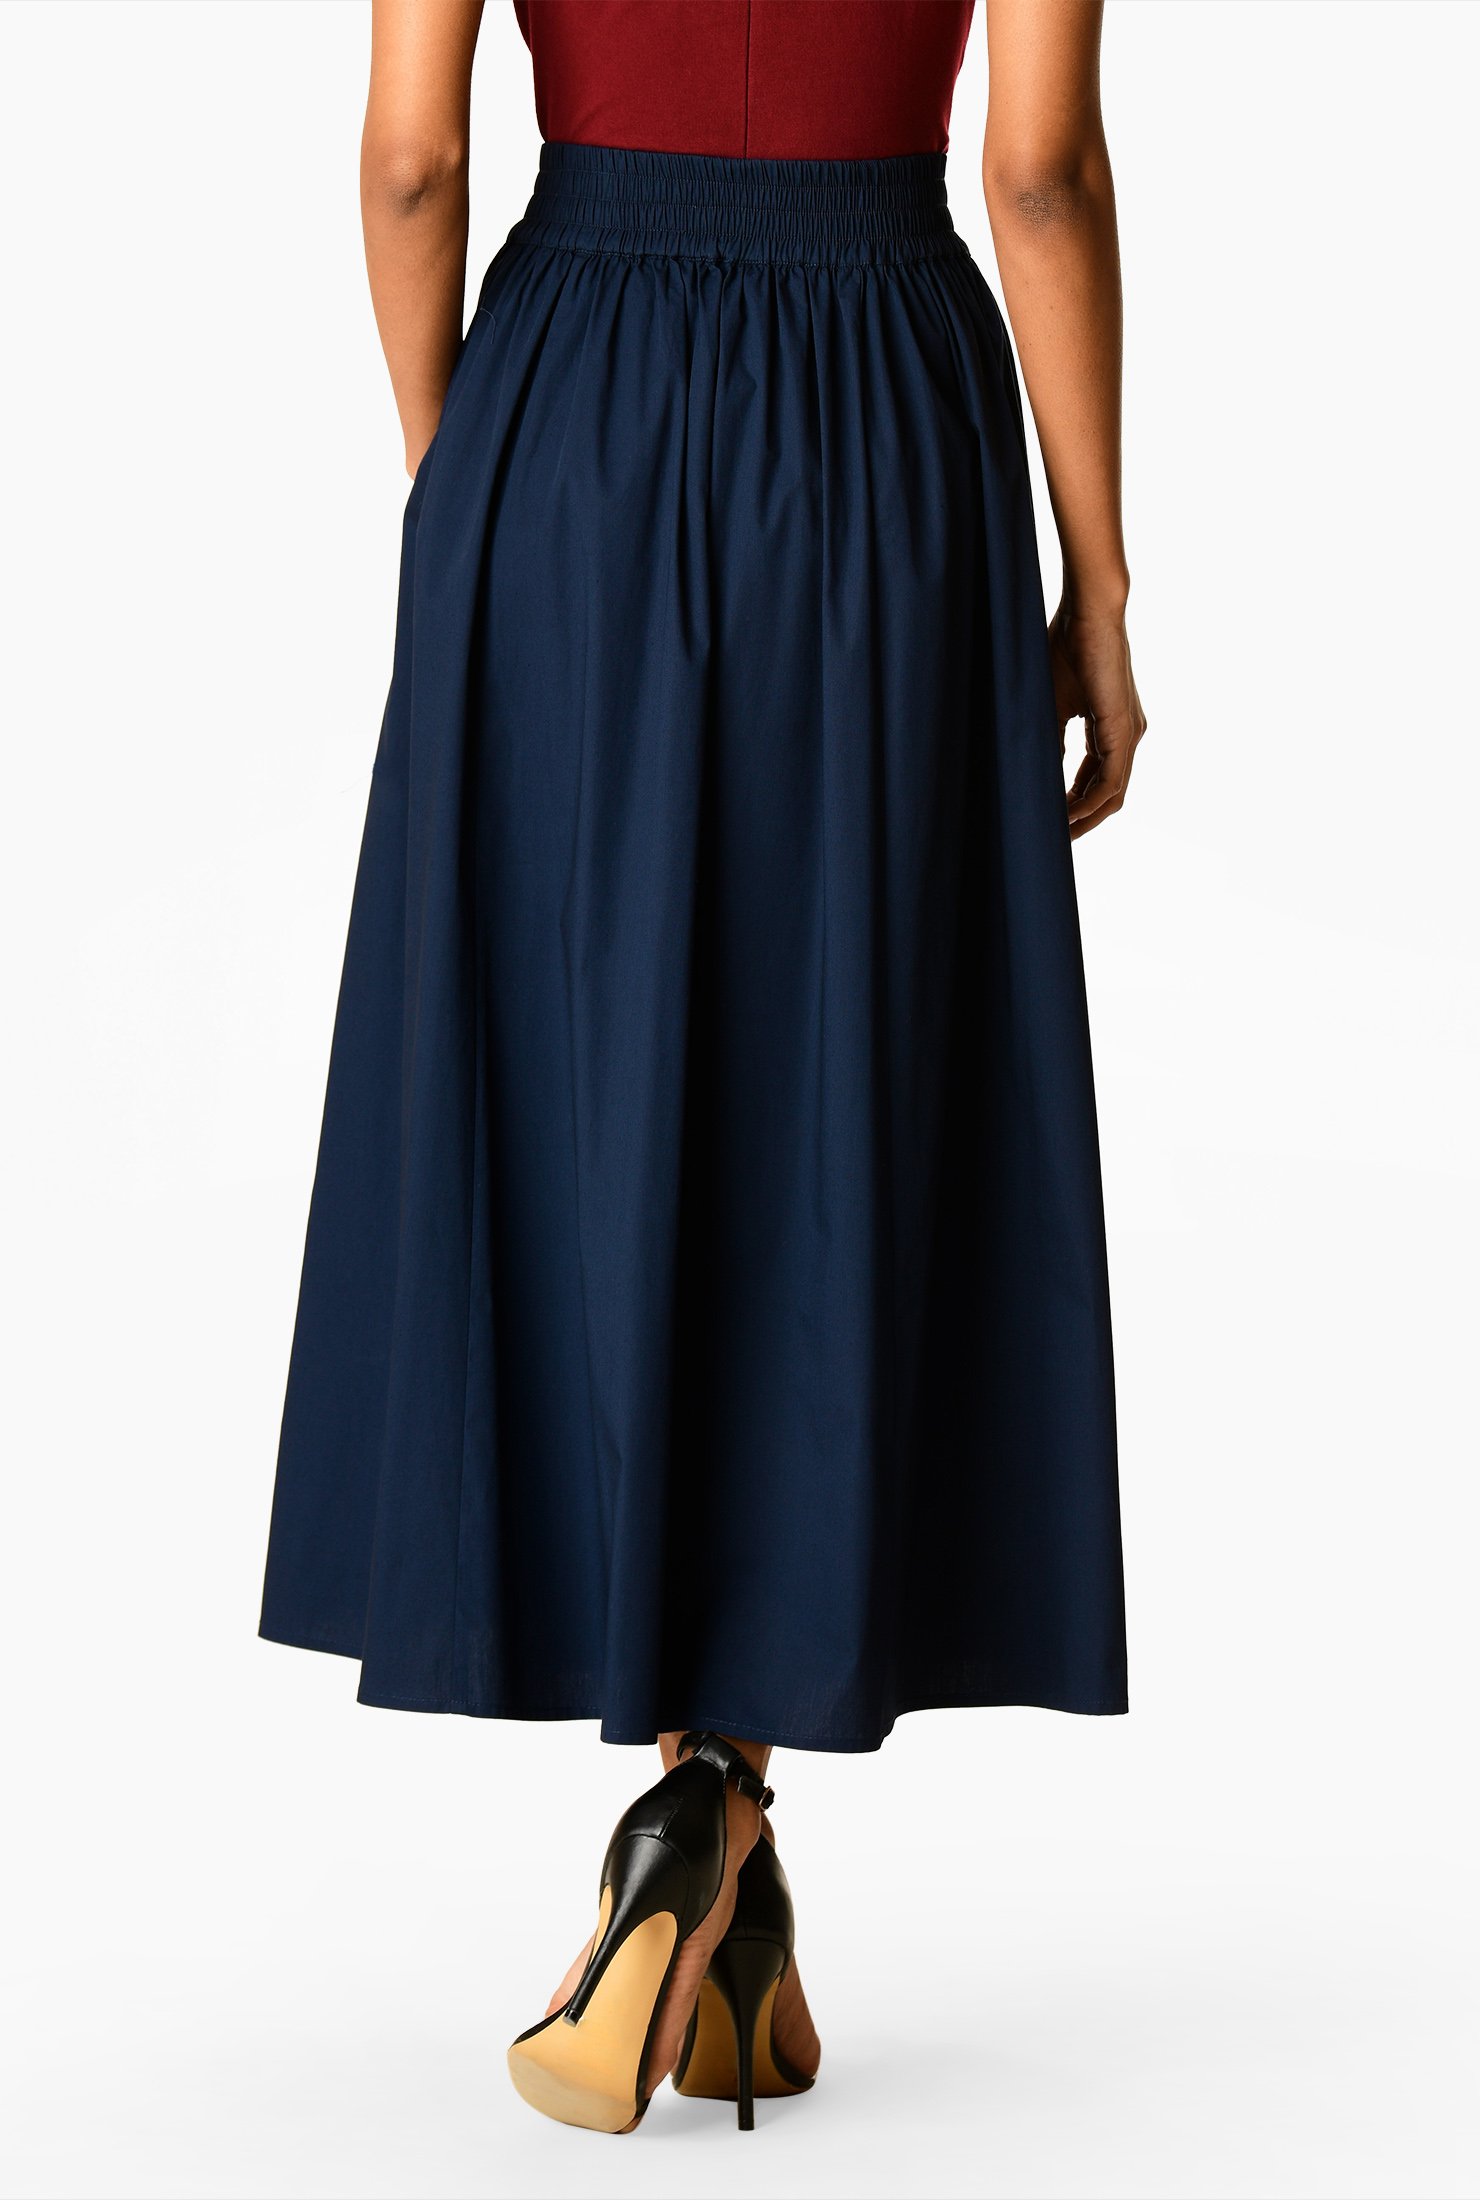 Shop Smocked elastic waist poplin skirt | eShakti